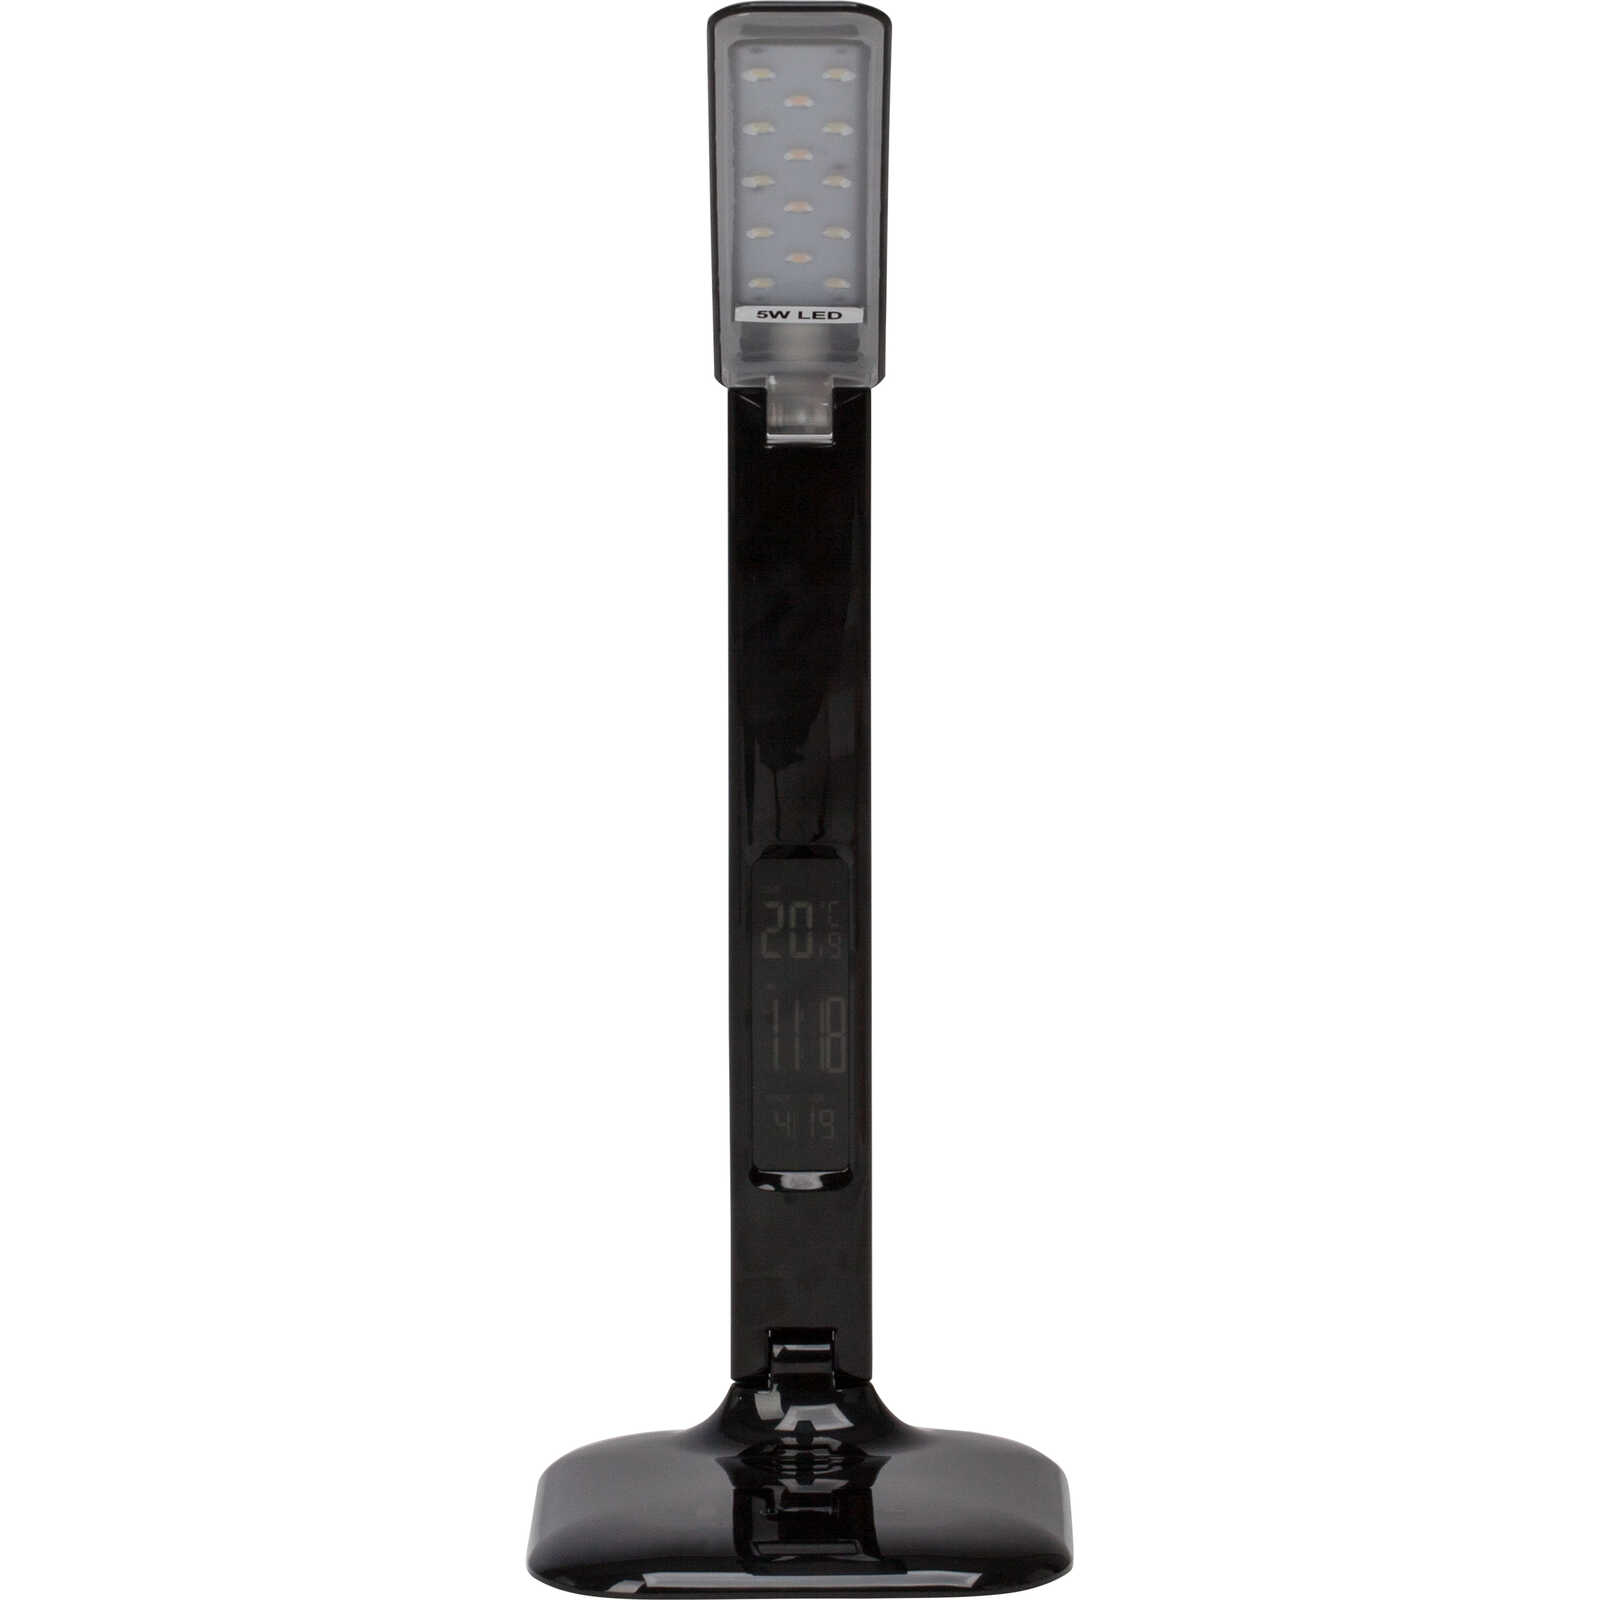             Lámpara de mesa de plástico - Hugo 2 - Negro
        